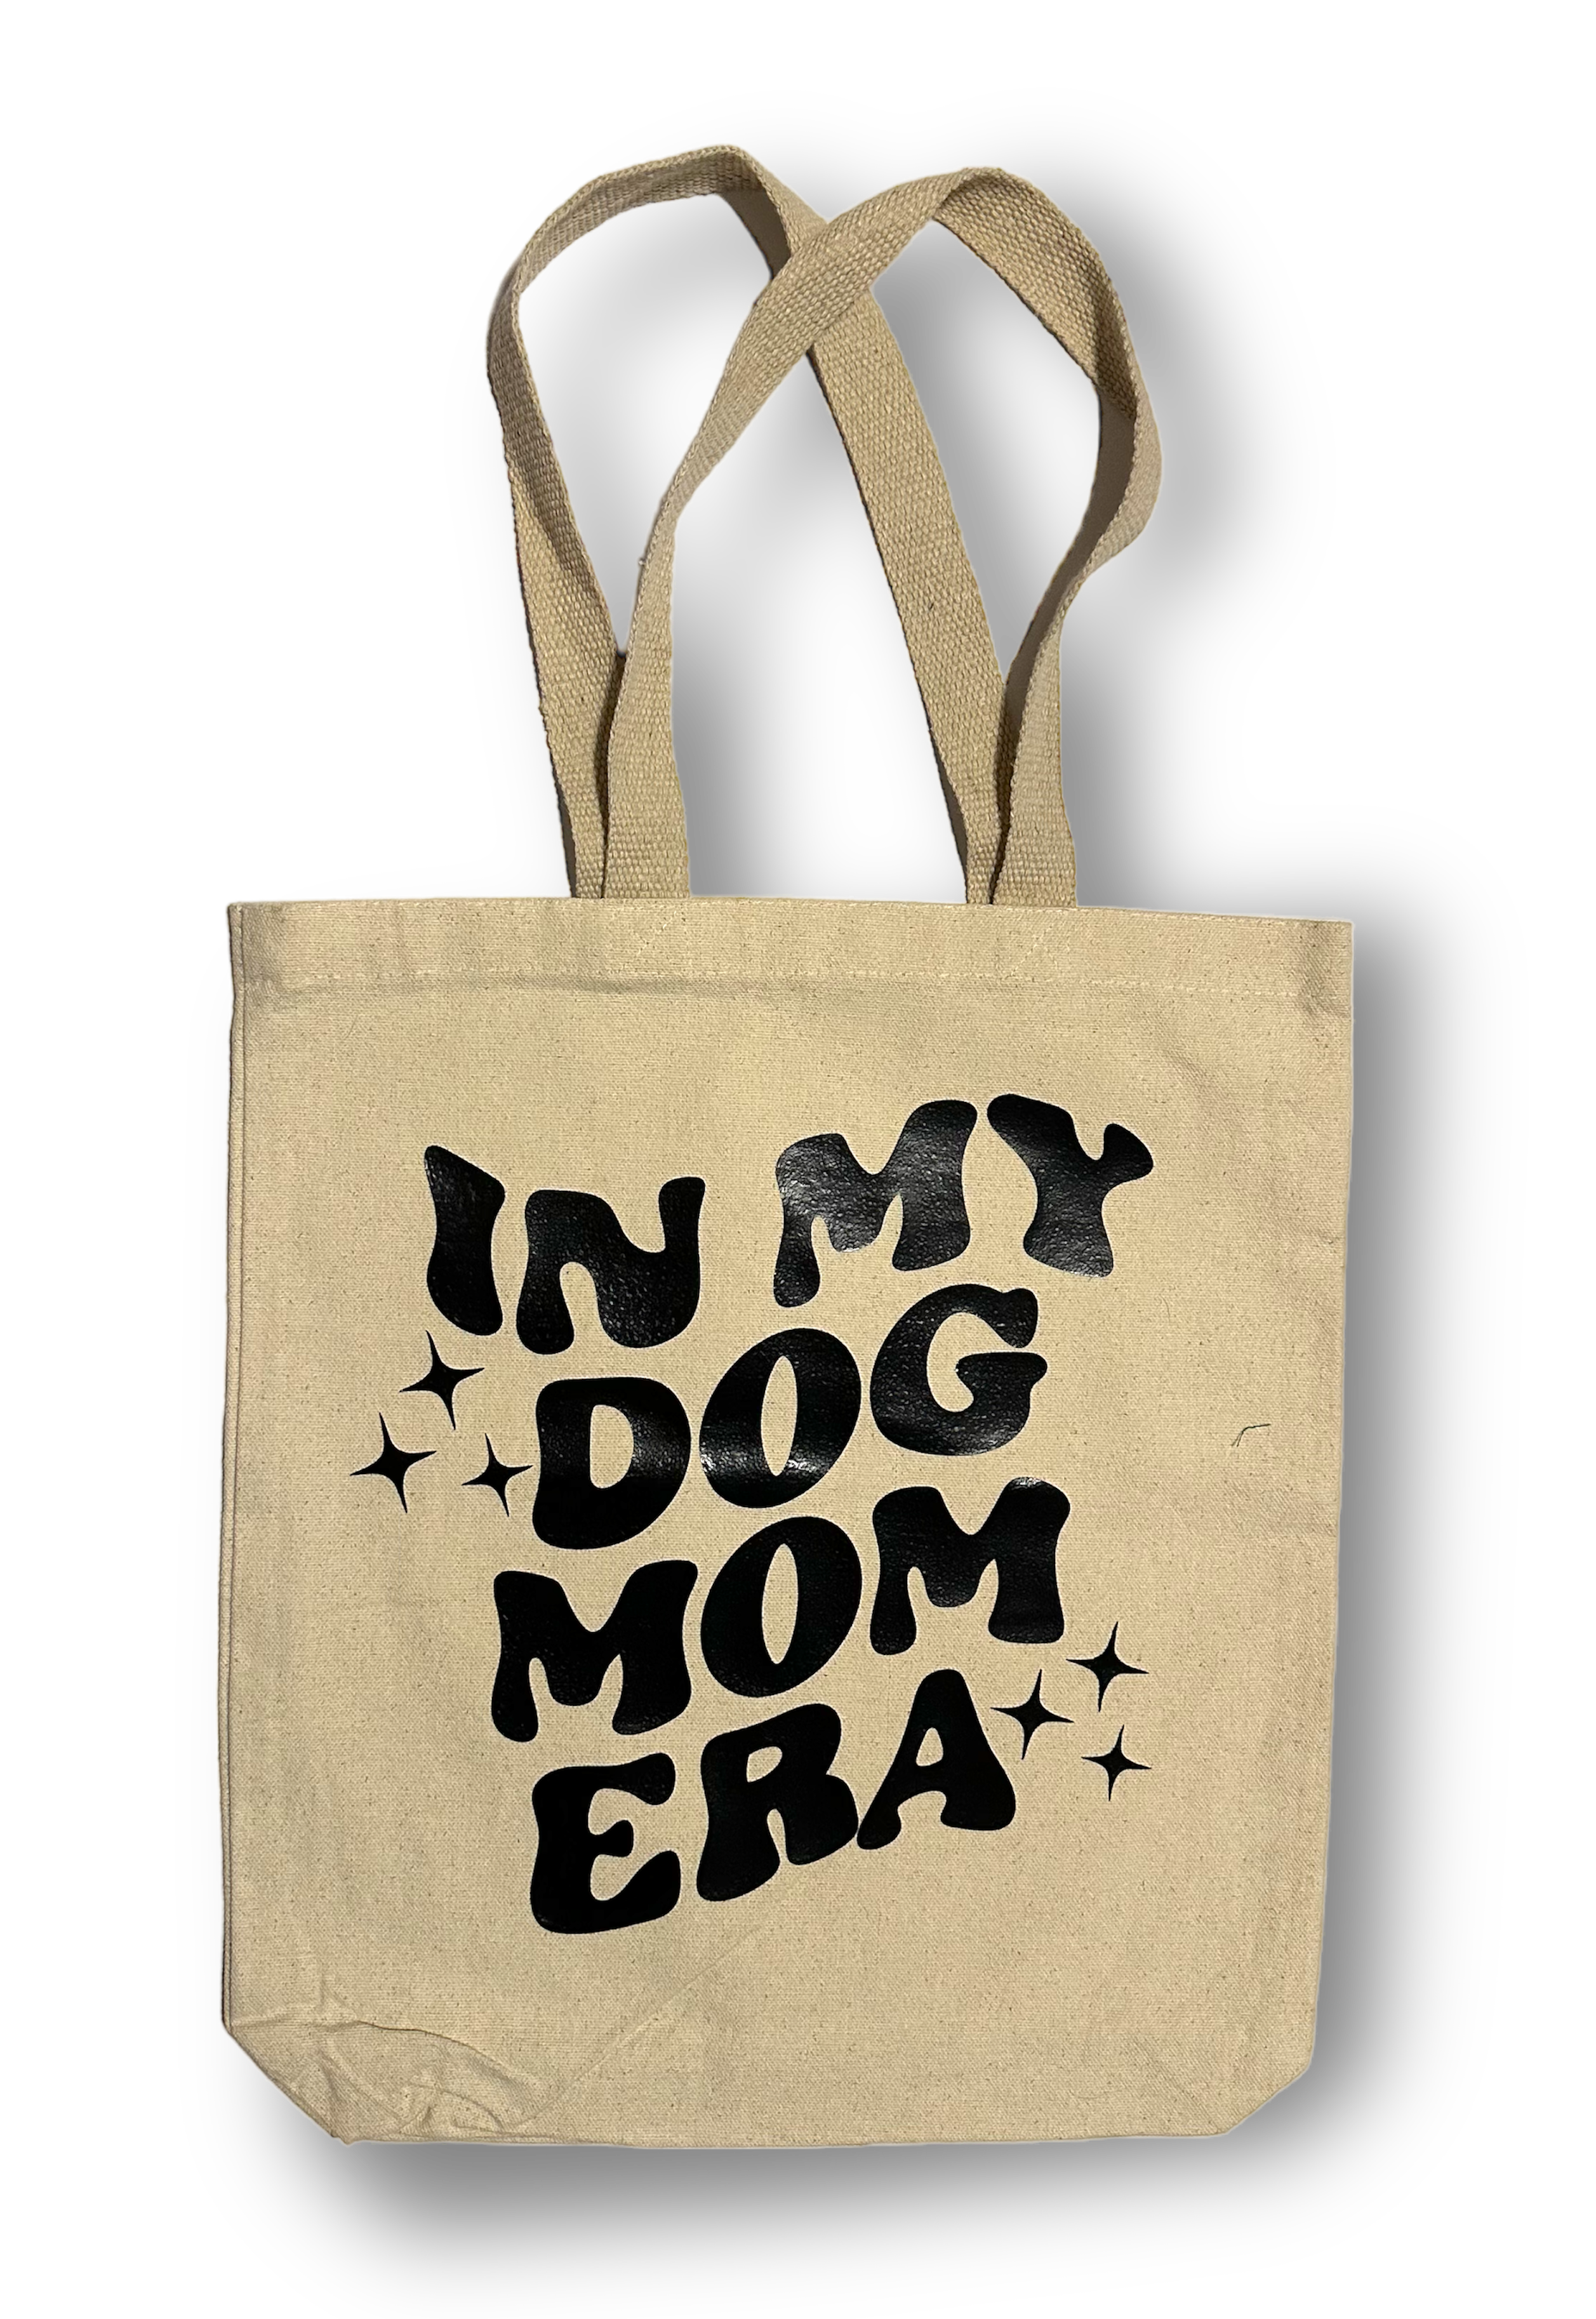 *NEW* Dog Mom Era Tote Tote Bag